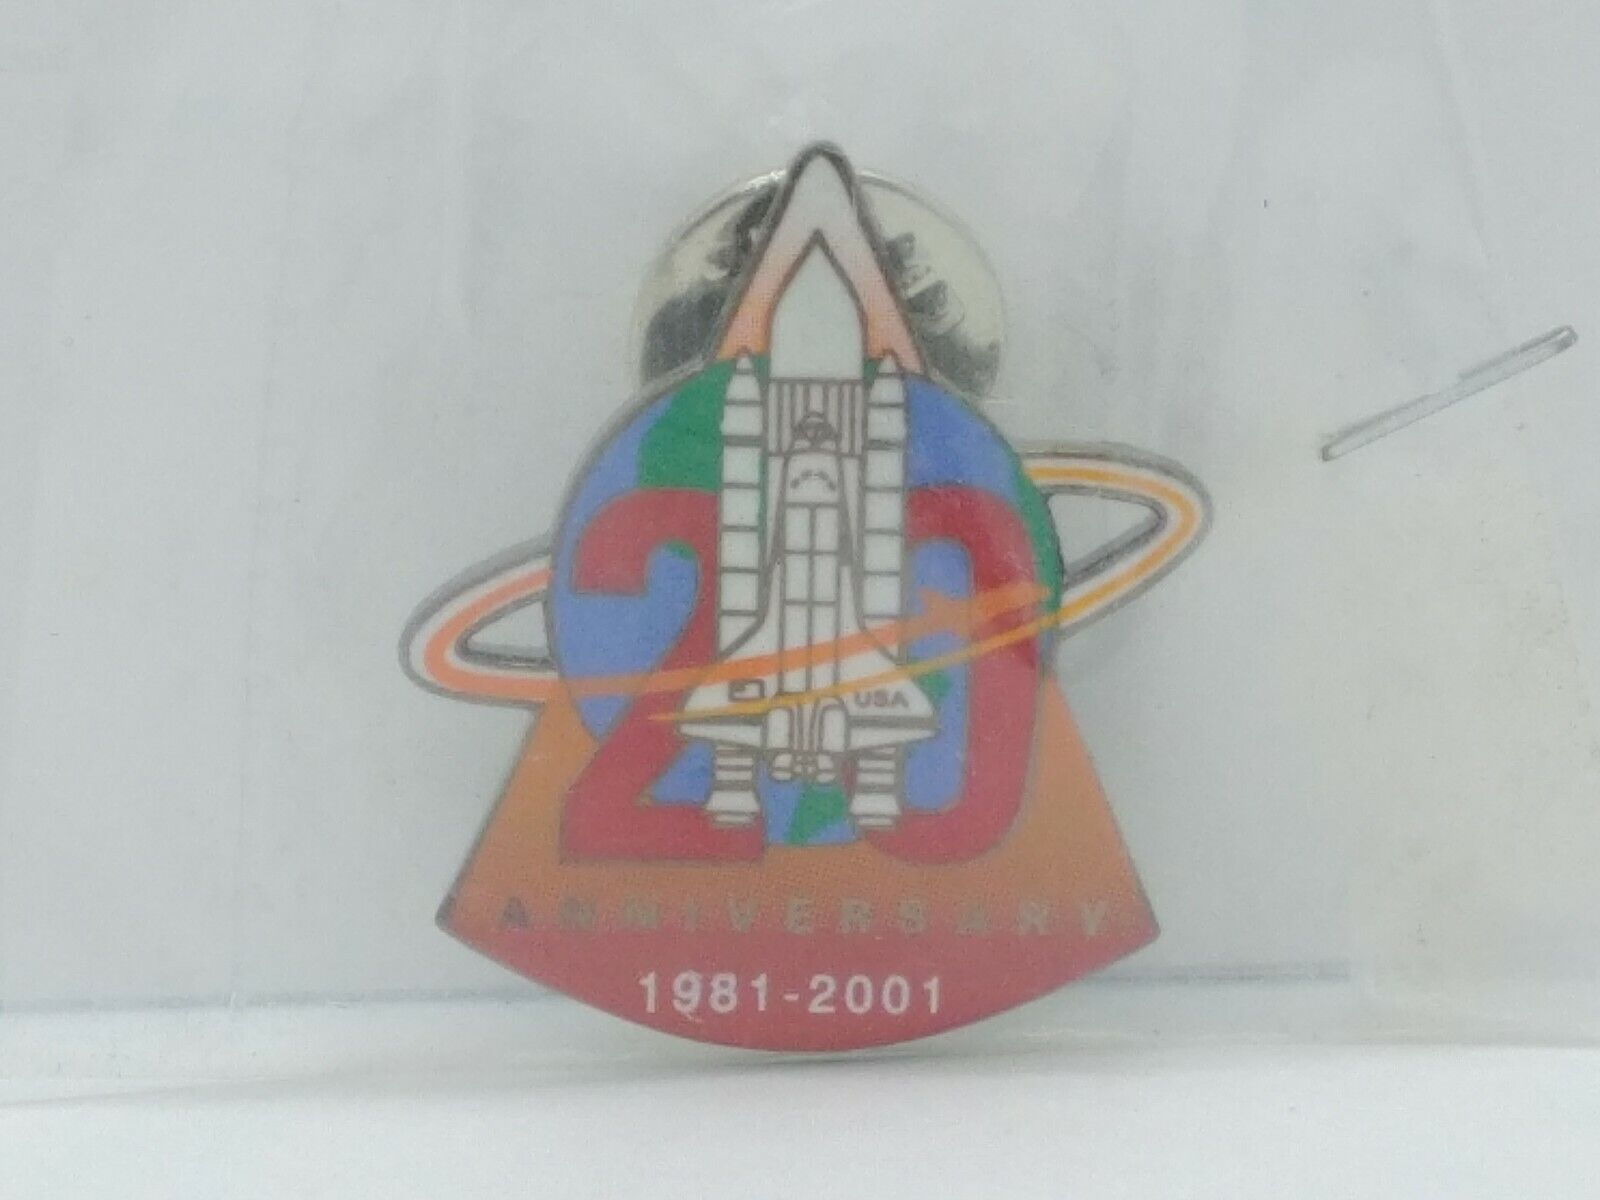 NASA SPACE SHUTTLE Program 20TH Anniversary 1981-2001 Official Pin 